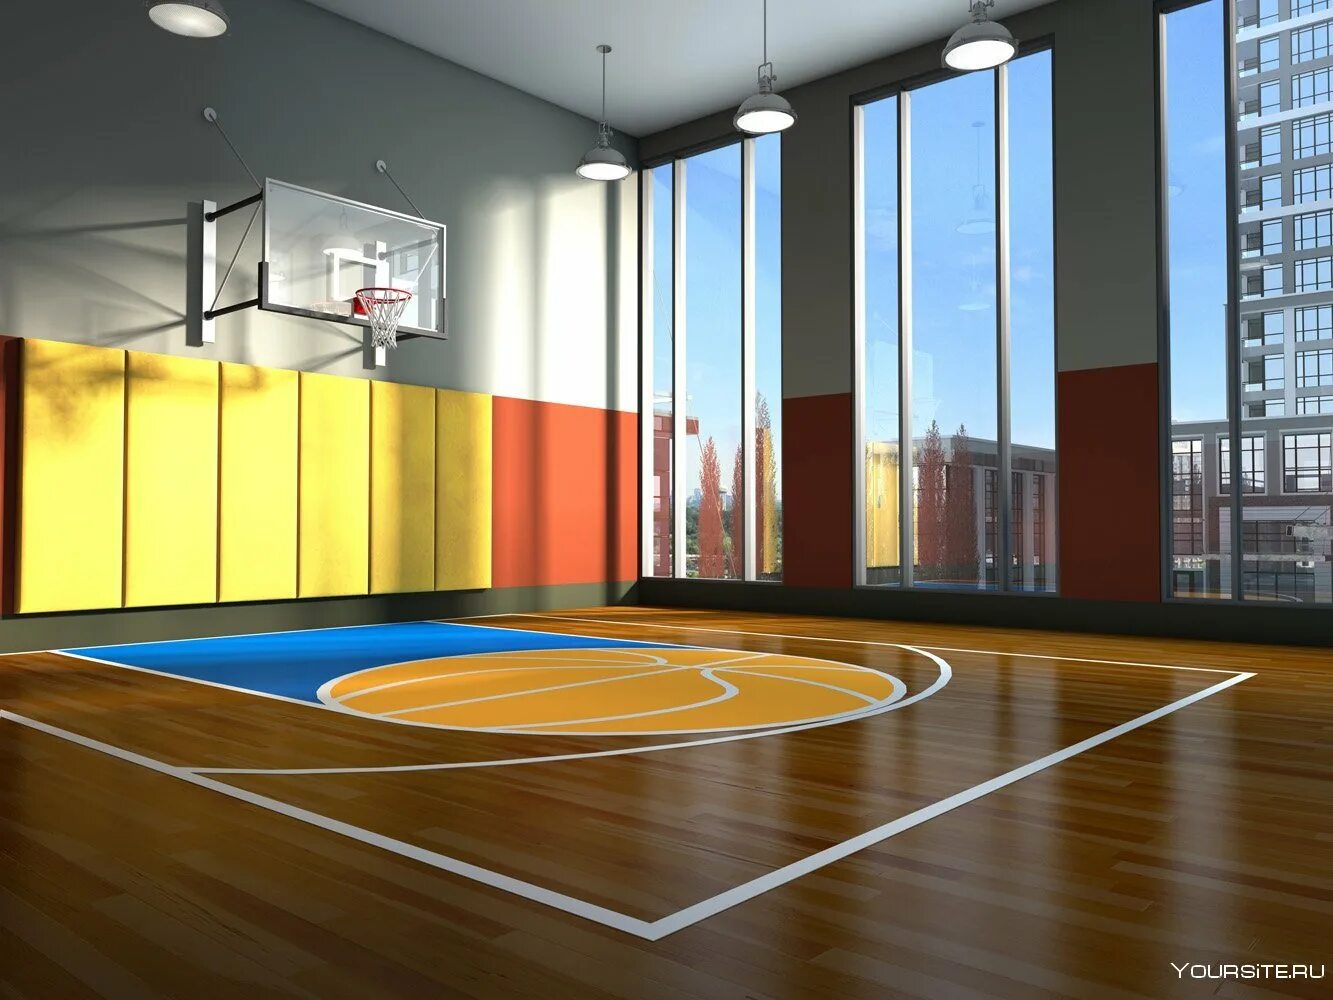 Играй 1 в зале. Зальная площадка баскетбольная. Первомайская 77 баскетбольный зал. Спортзал баскетбол. Спортивный зал.